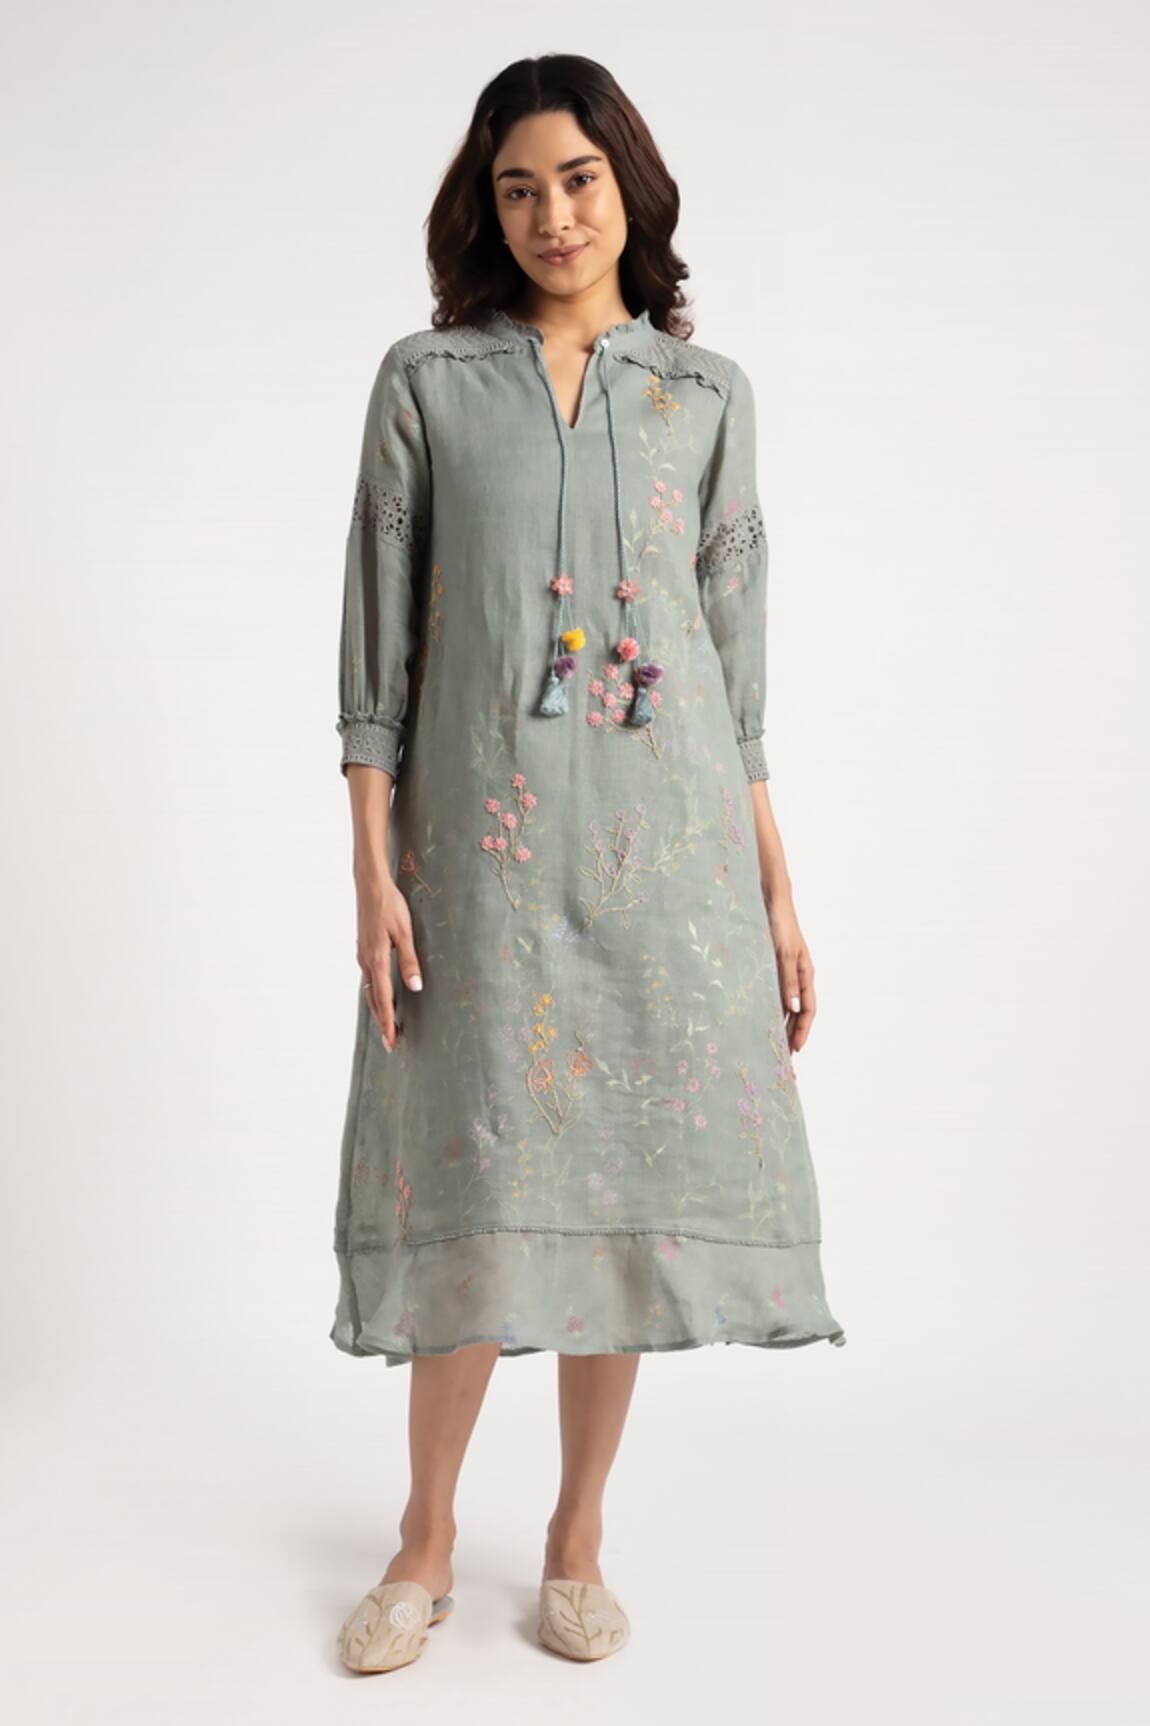 Kaveri Walk in the Clouds Karma Floral Print Dress